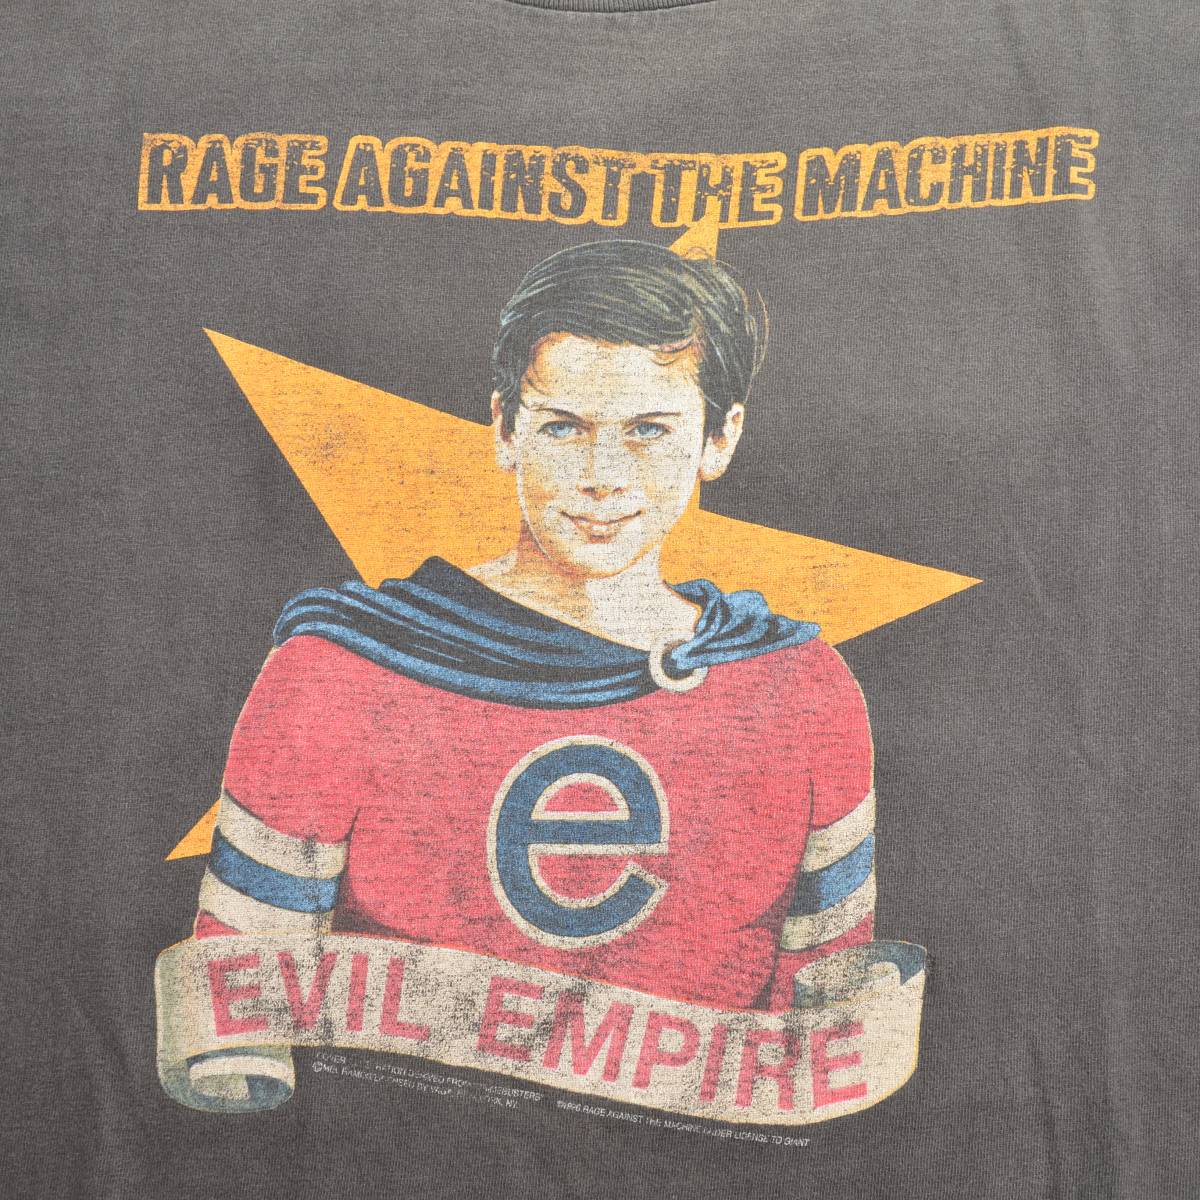 90s rage against the machine tシャツ ビンテージ